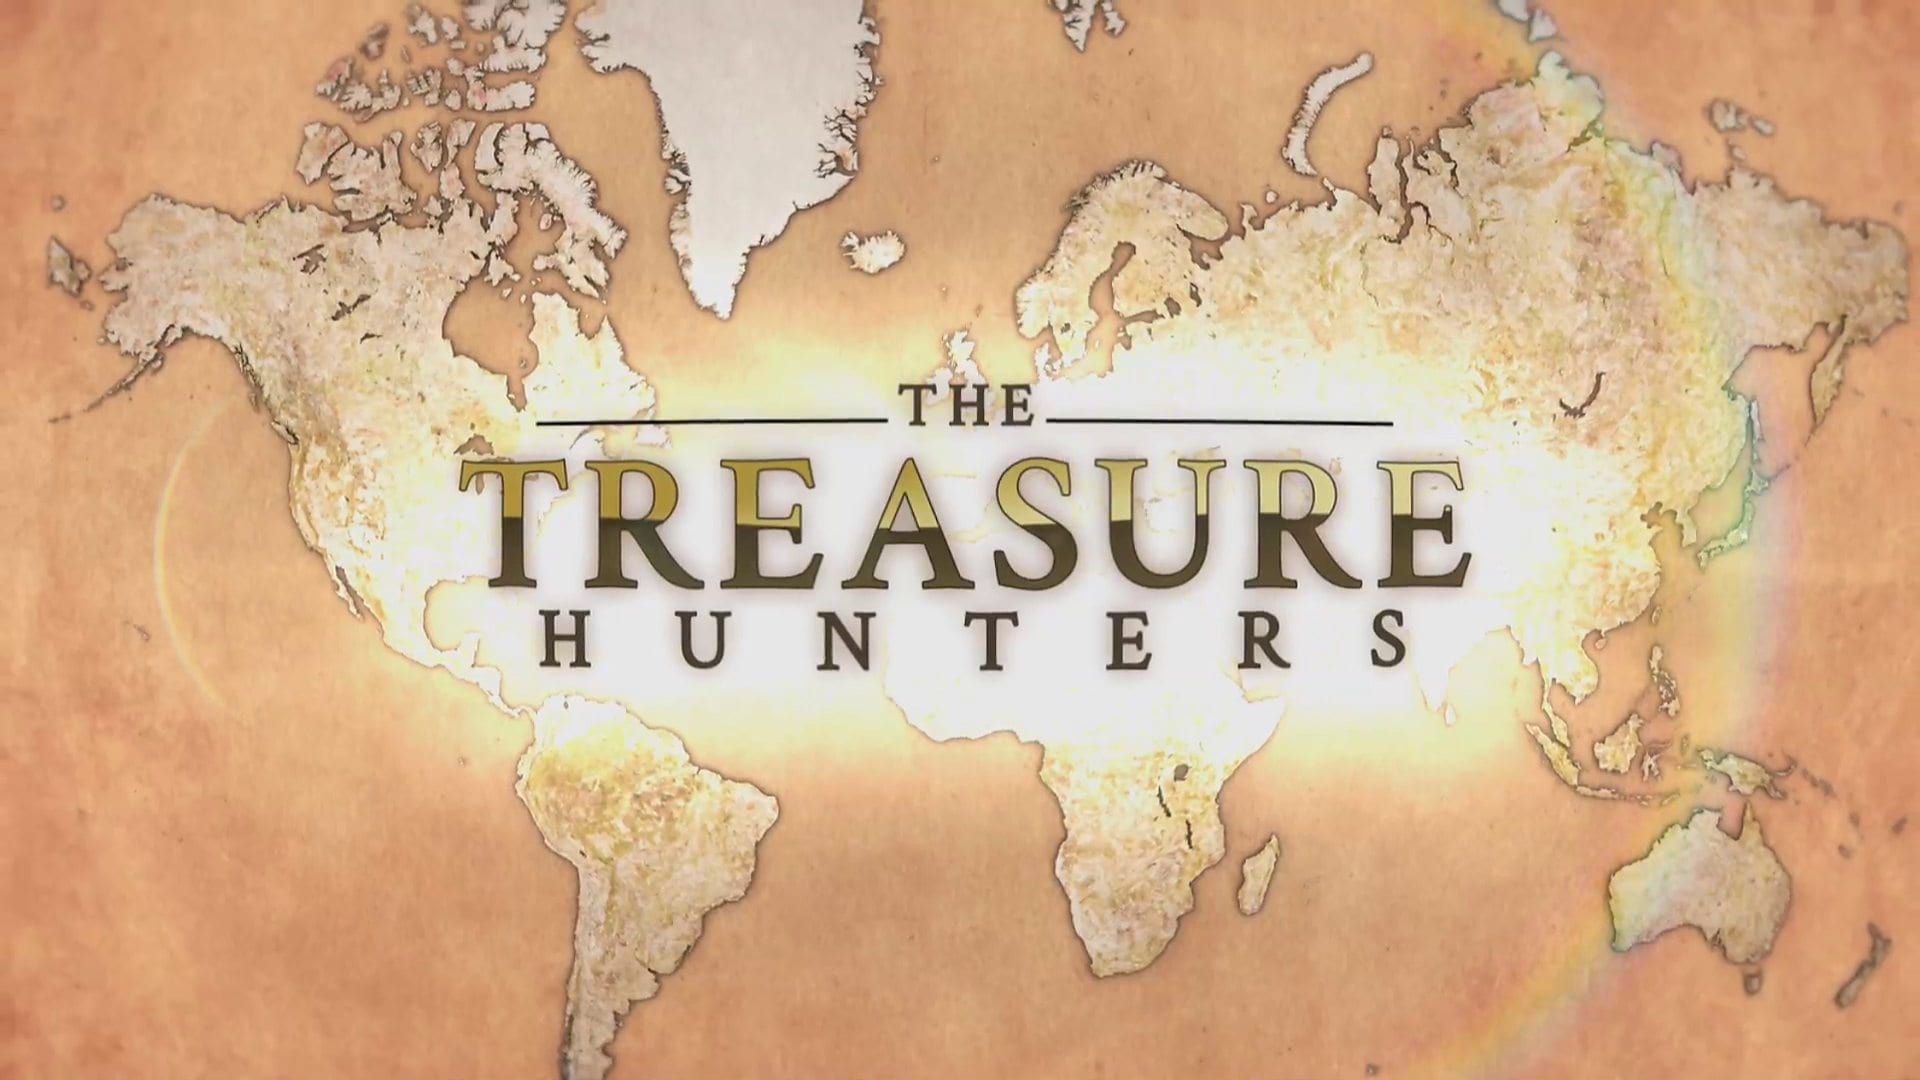 The Treasure Hunters background